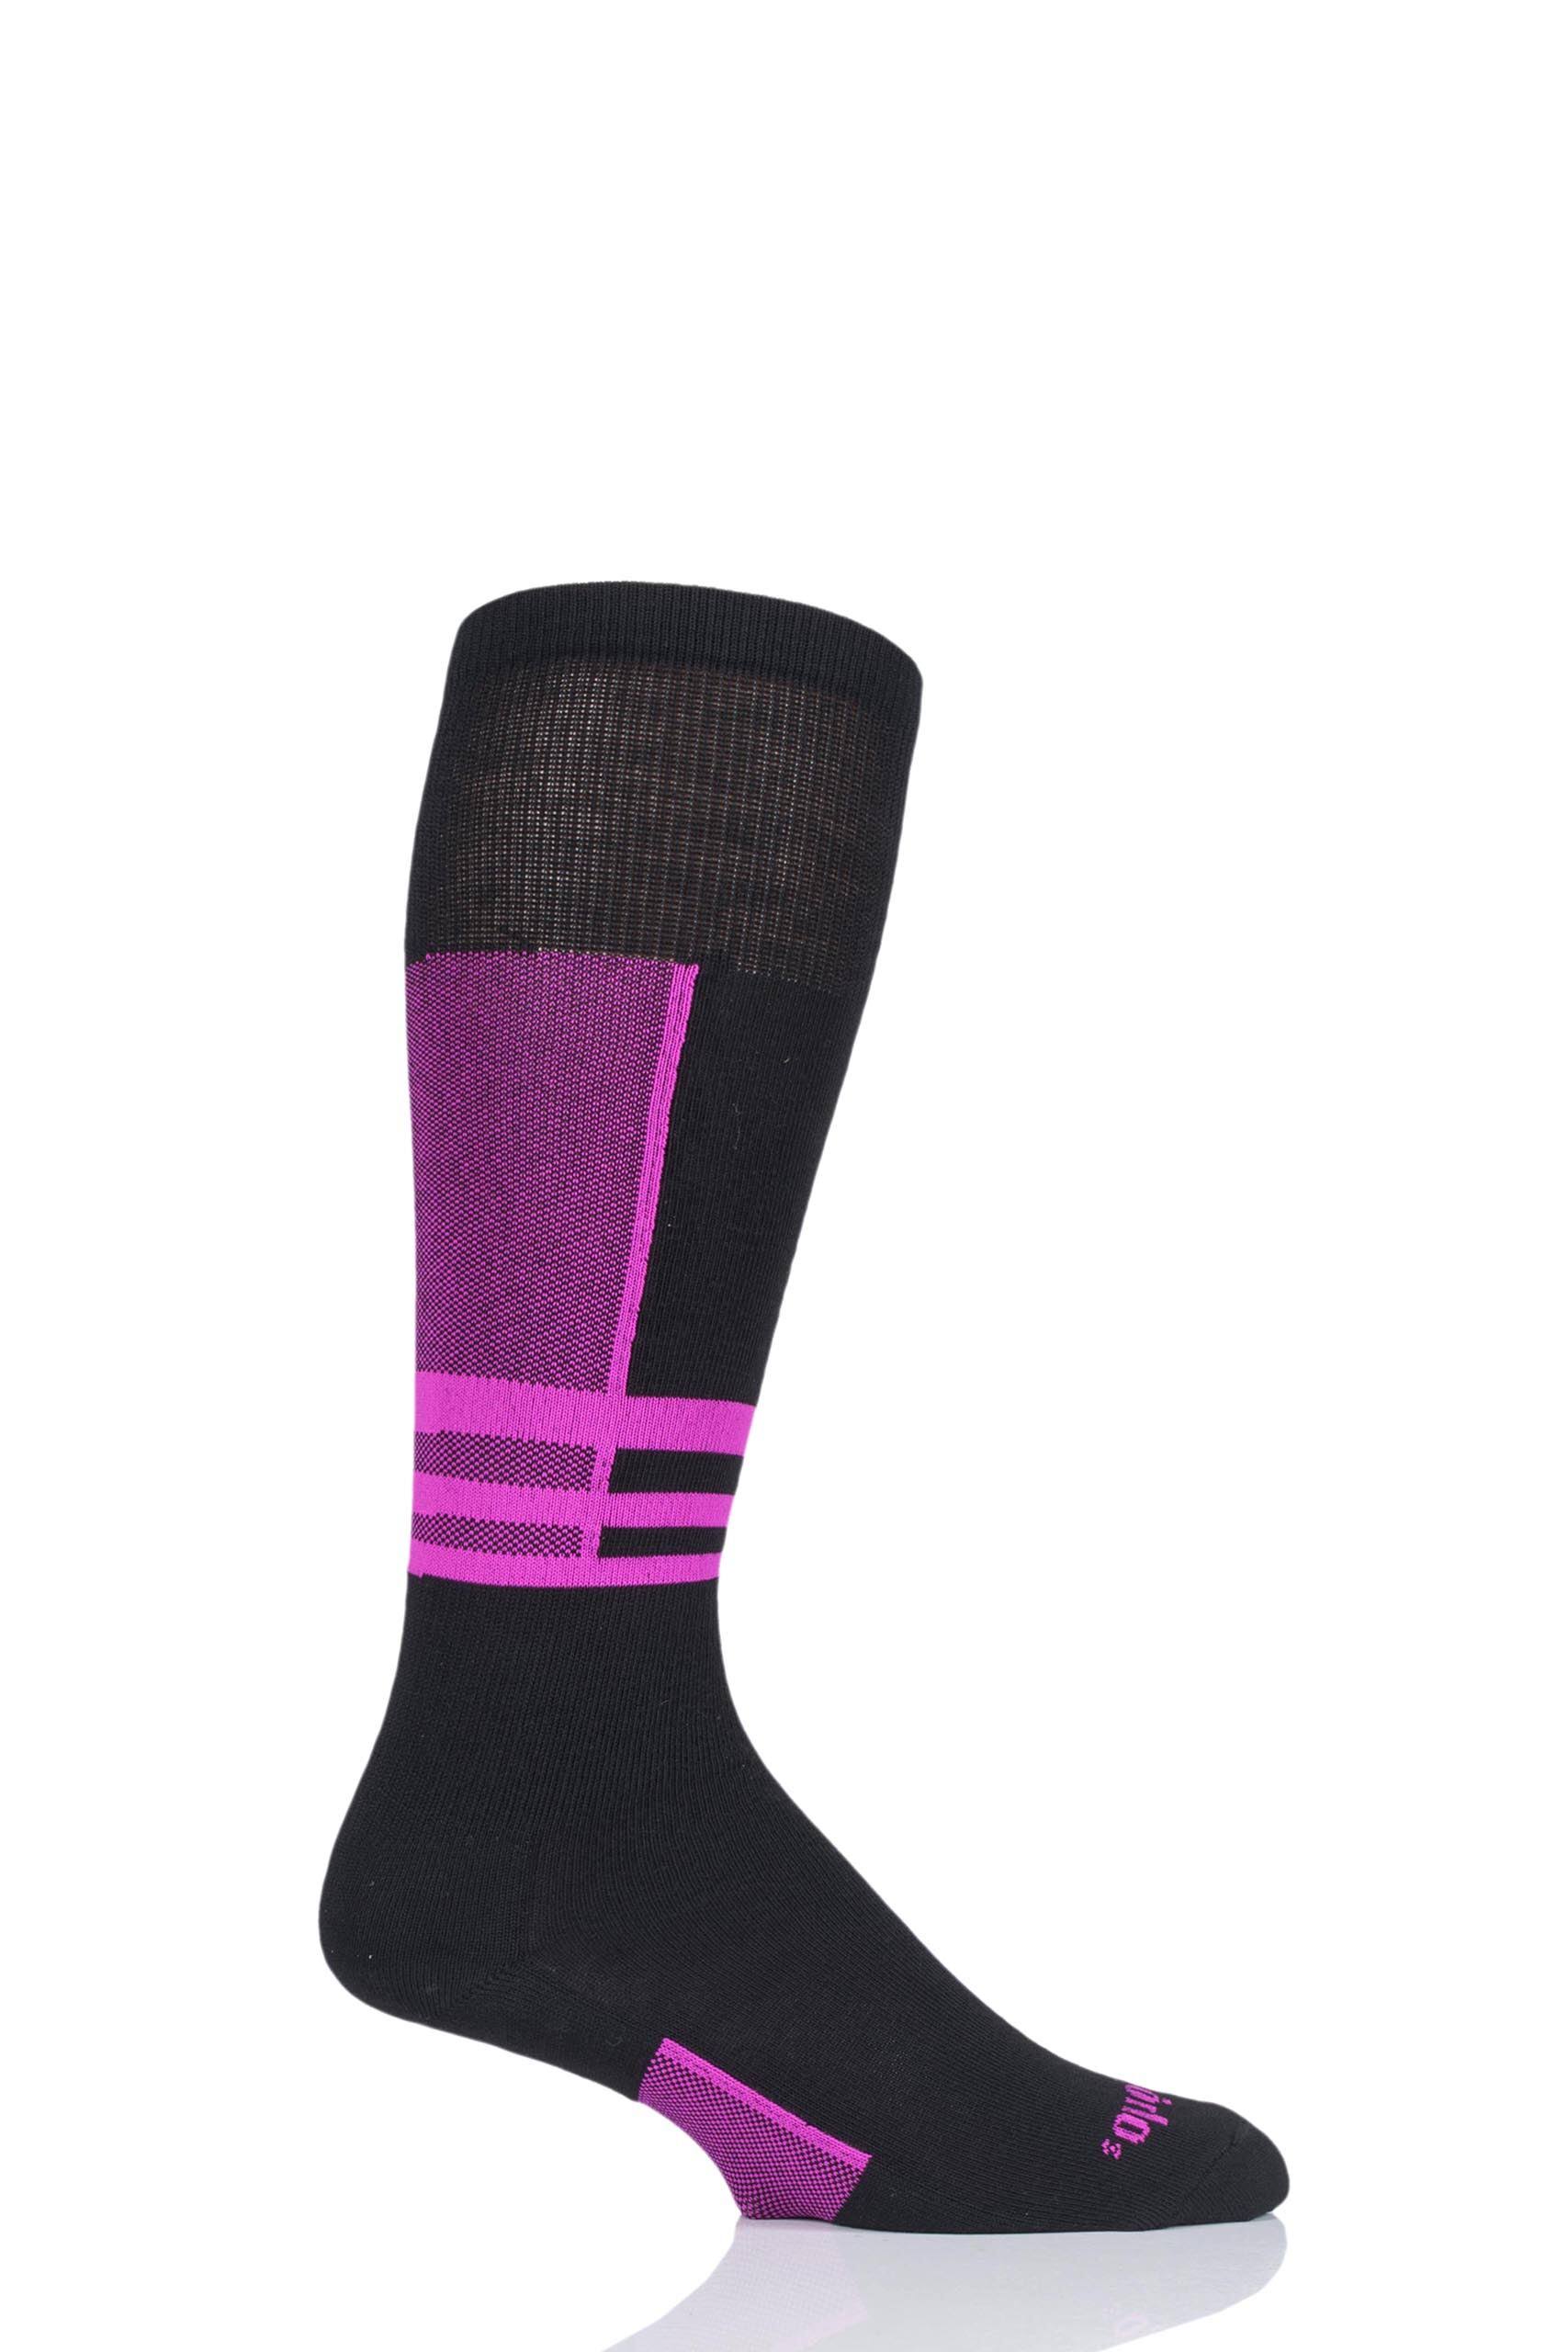 Thorlo Ultra Light Ski Liner Sock - Pink/Black - 8-9.5